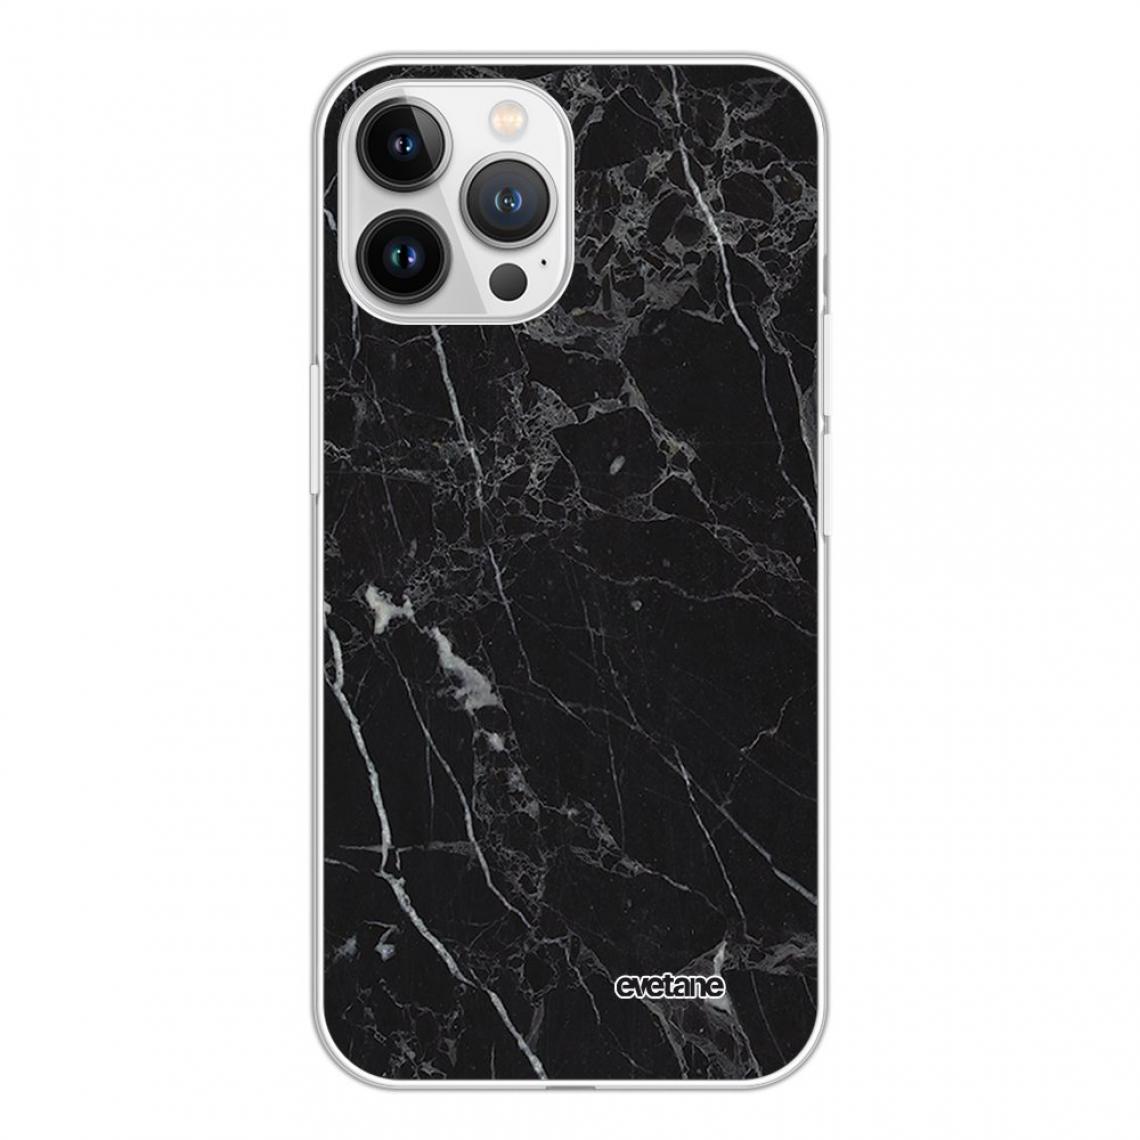 Evetane - Coque iPhone 13 Pro Max souple silicone transparente - Coque, étui smartphone